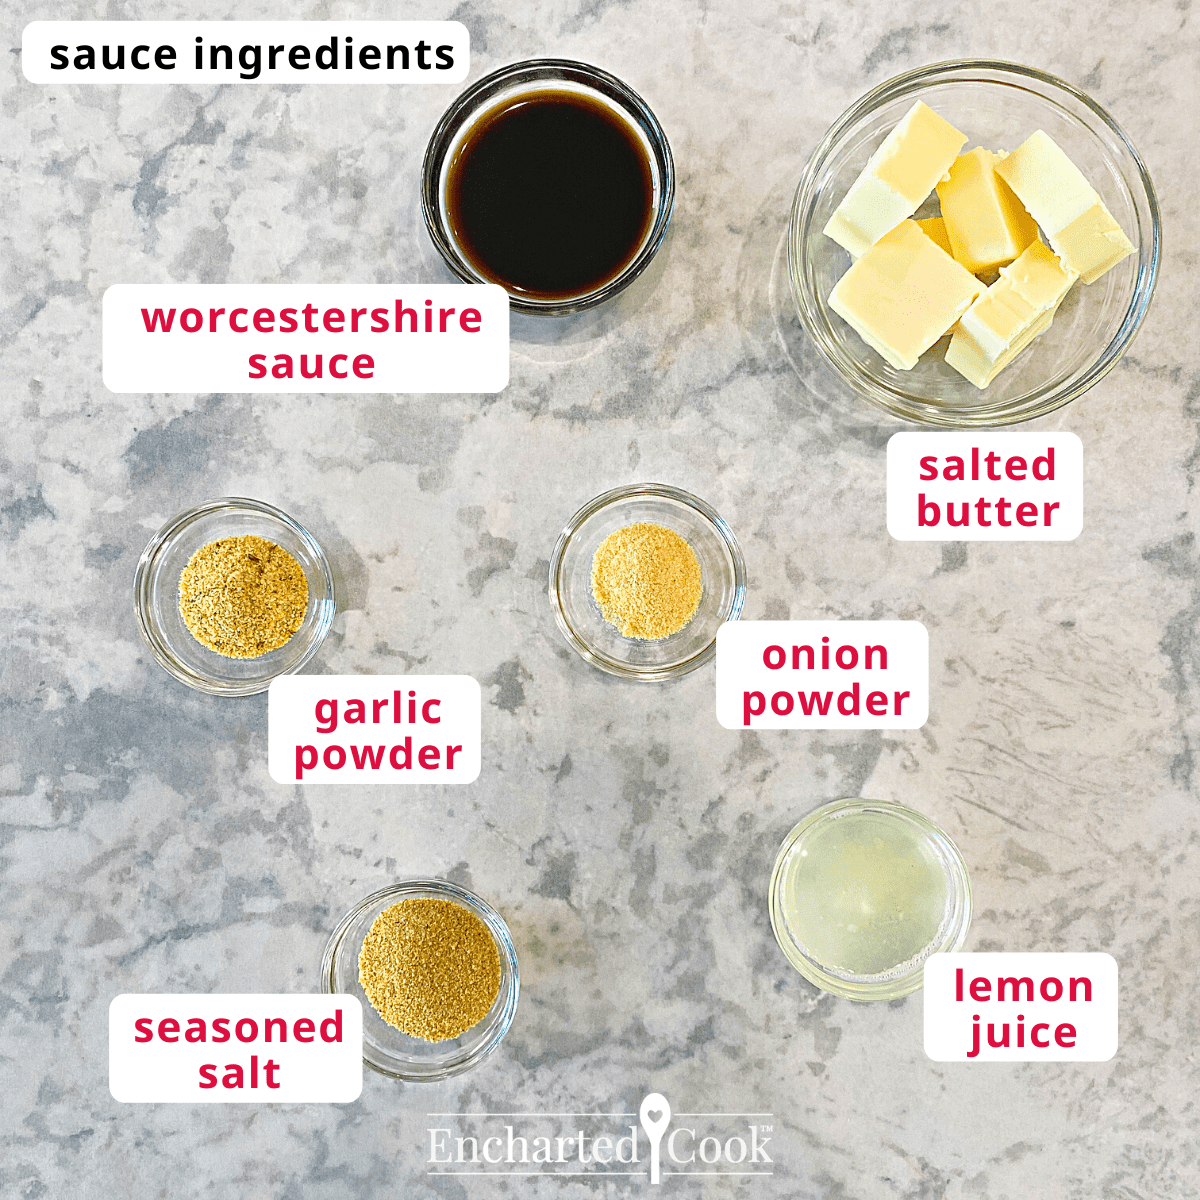 Sauce ingredients, clockwise from top: worcestershire sauce, salted butter, onion powder, lemon juice, seasoned salt, and garlic powder.